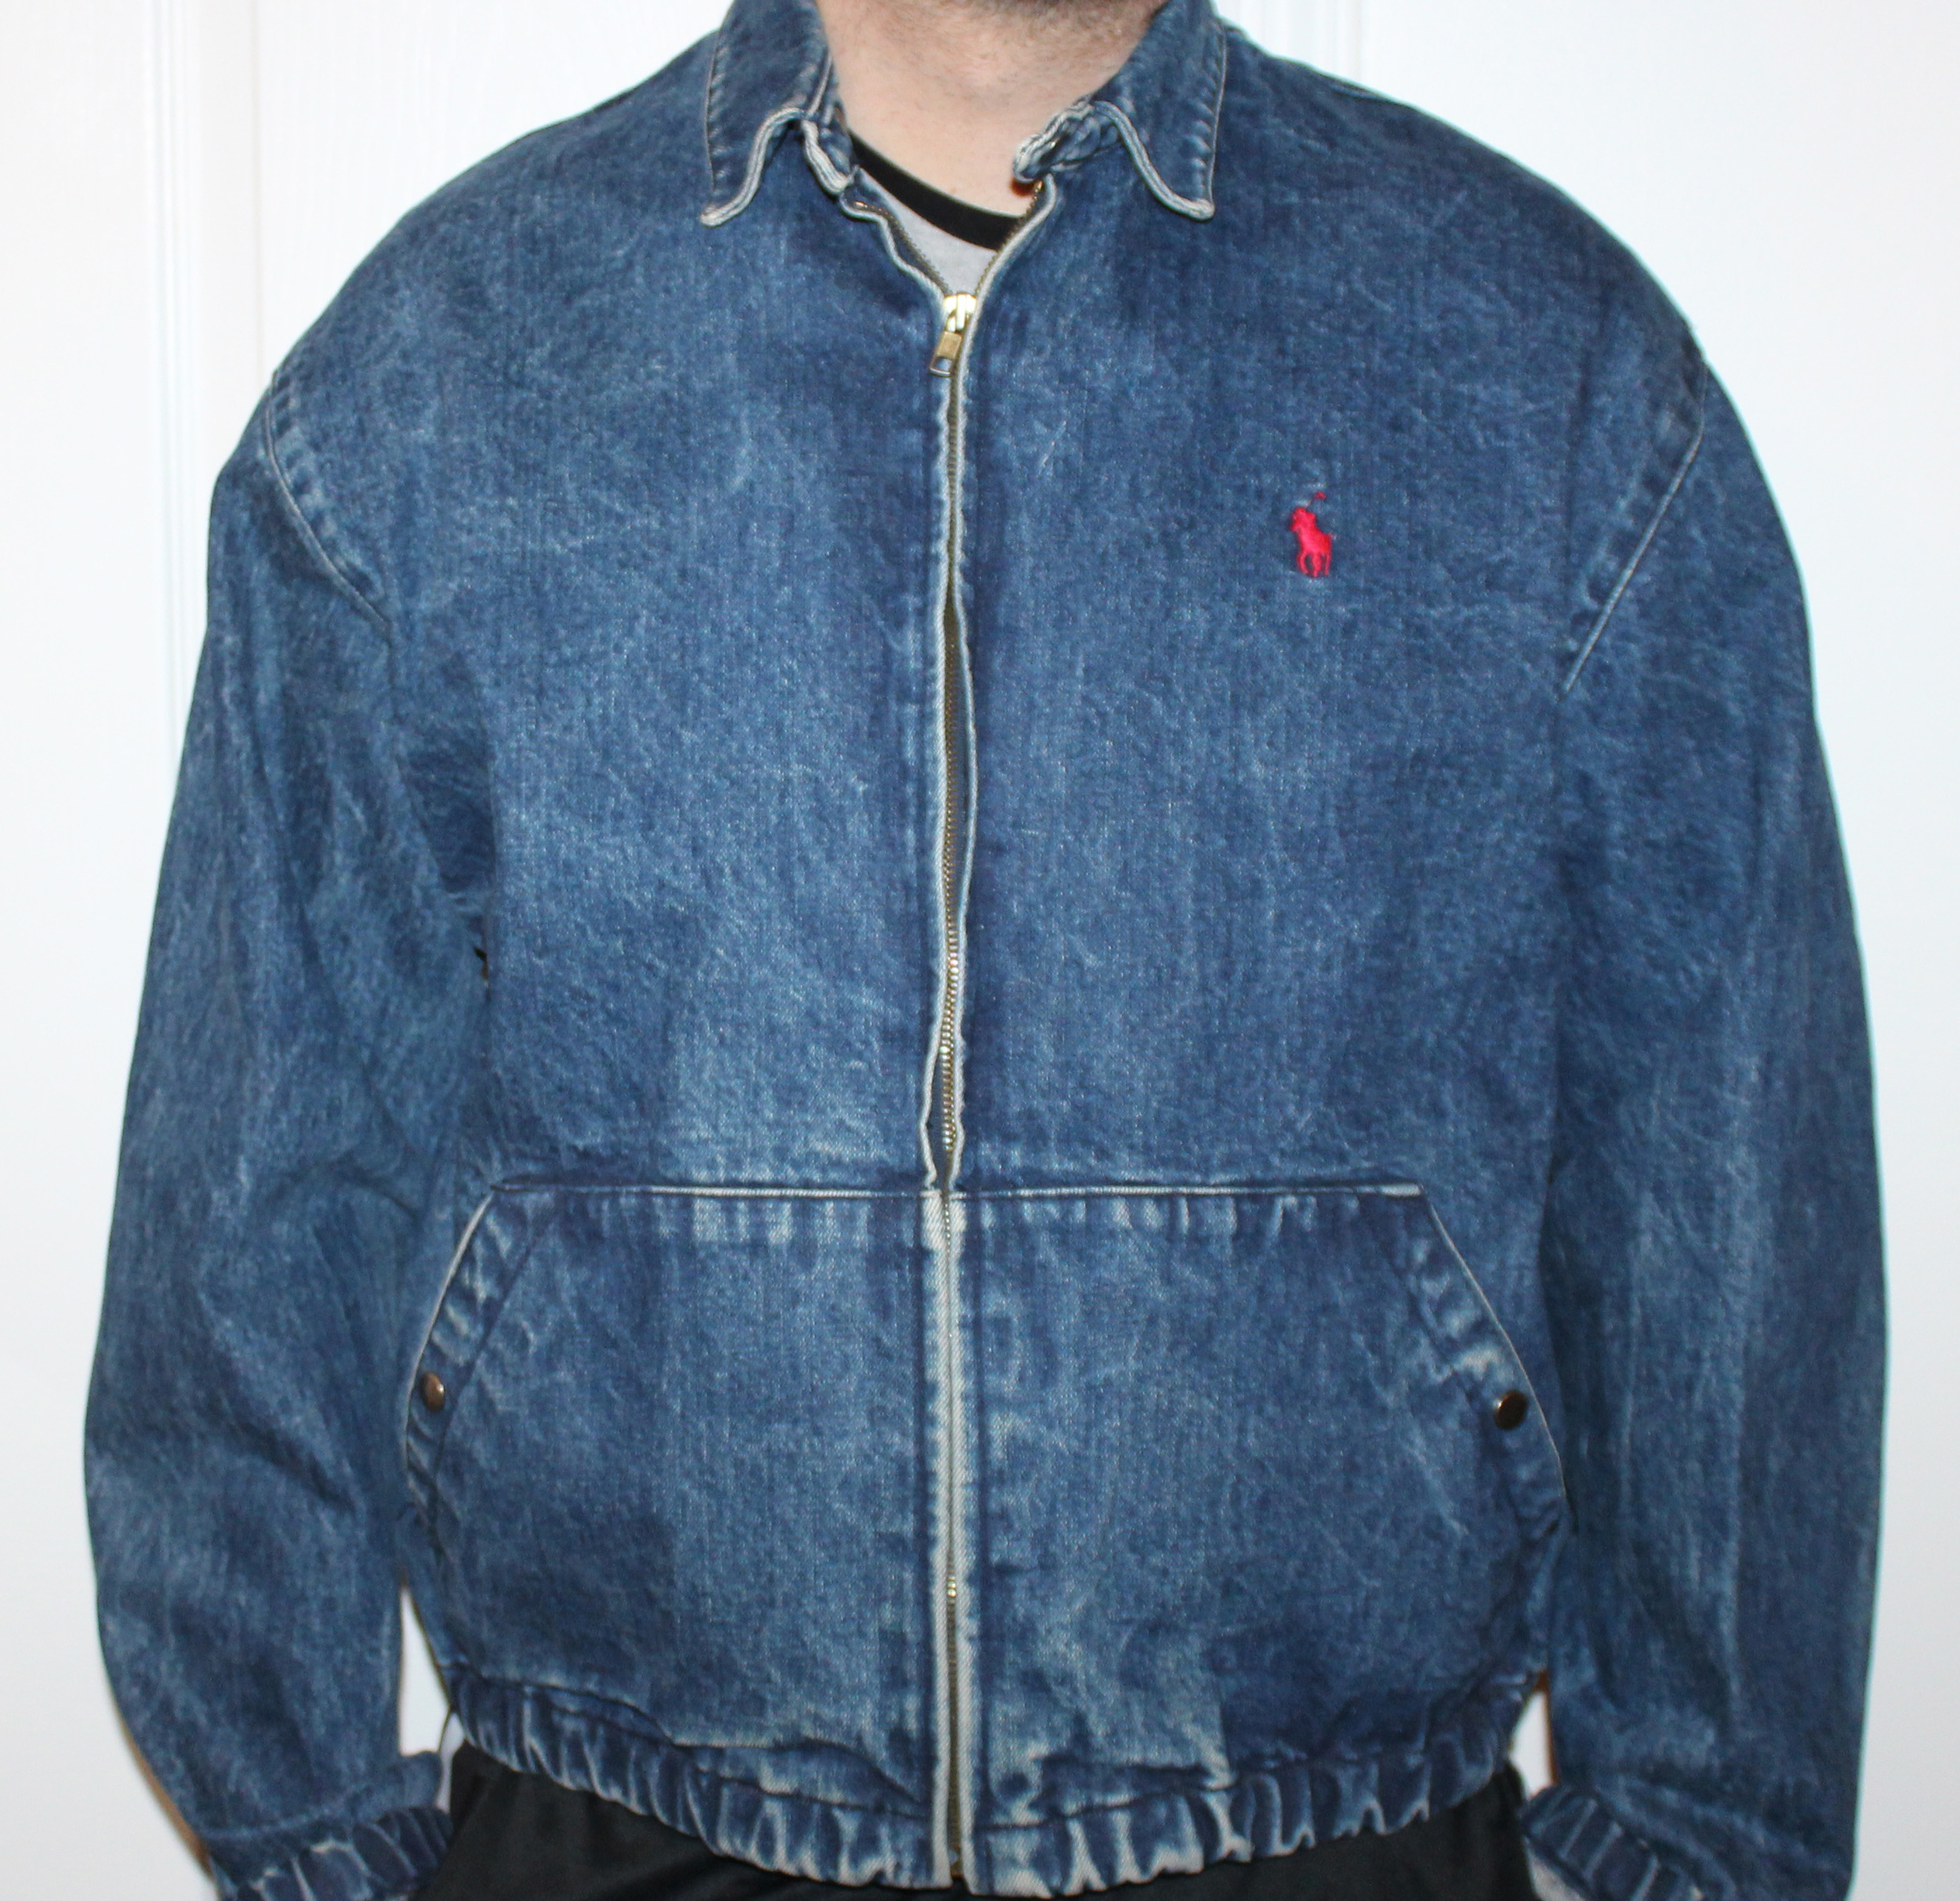 vintage polo jean jacket Off 73% - www.gmcanantnag.net